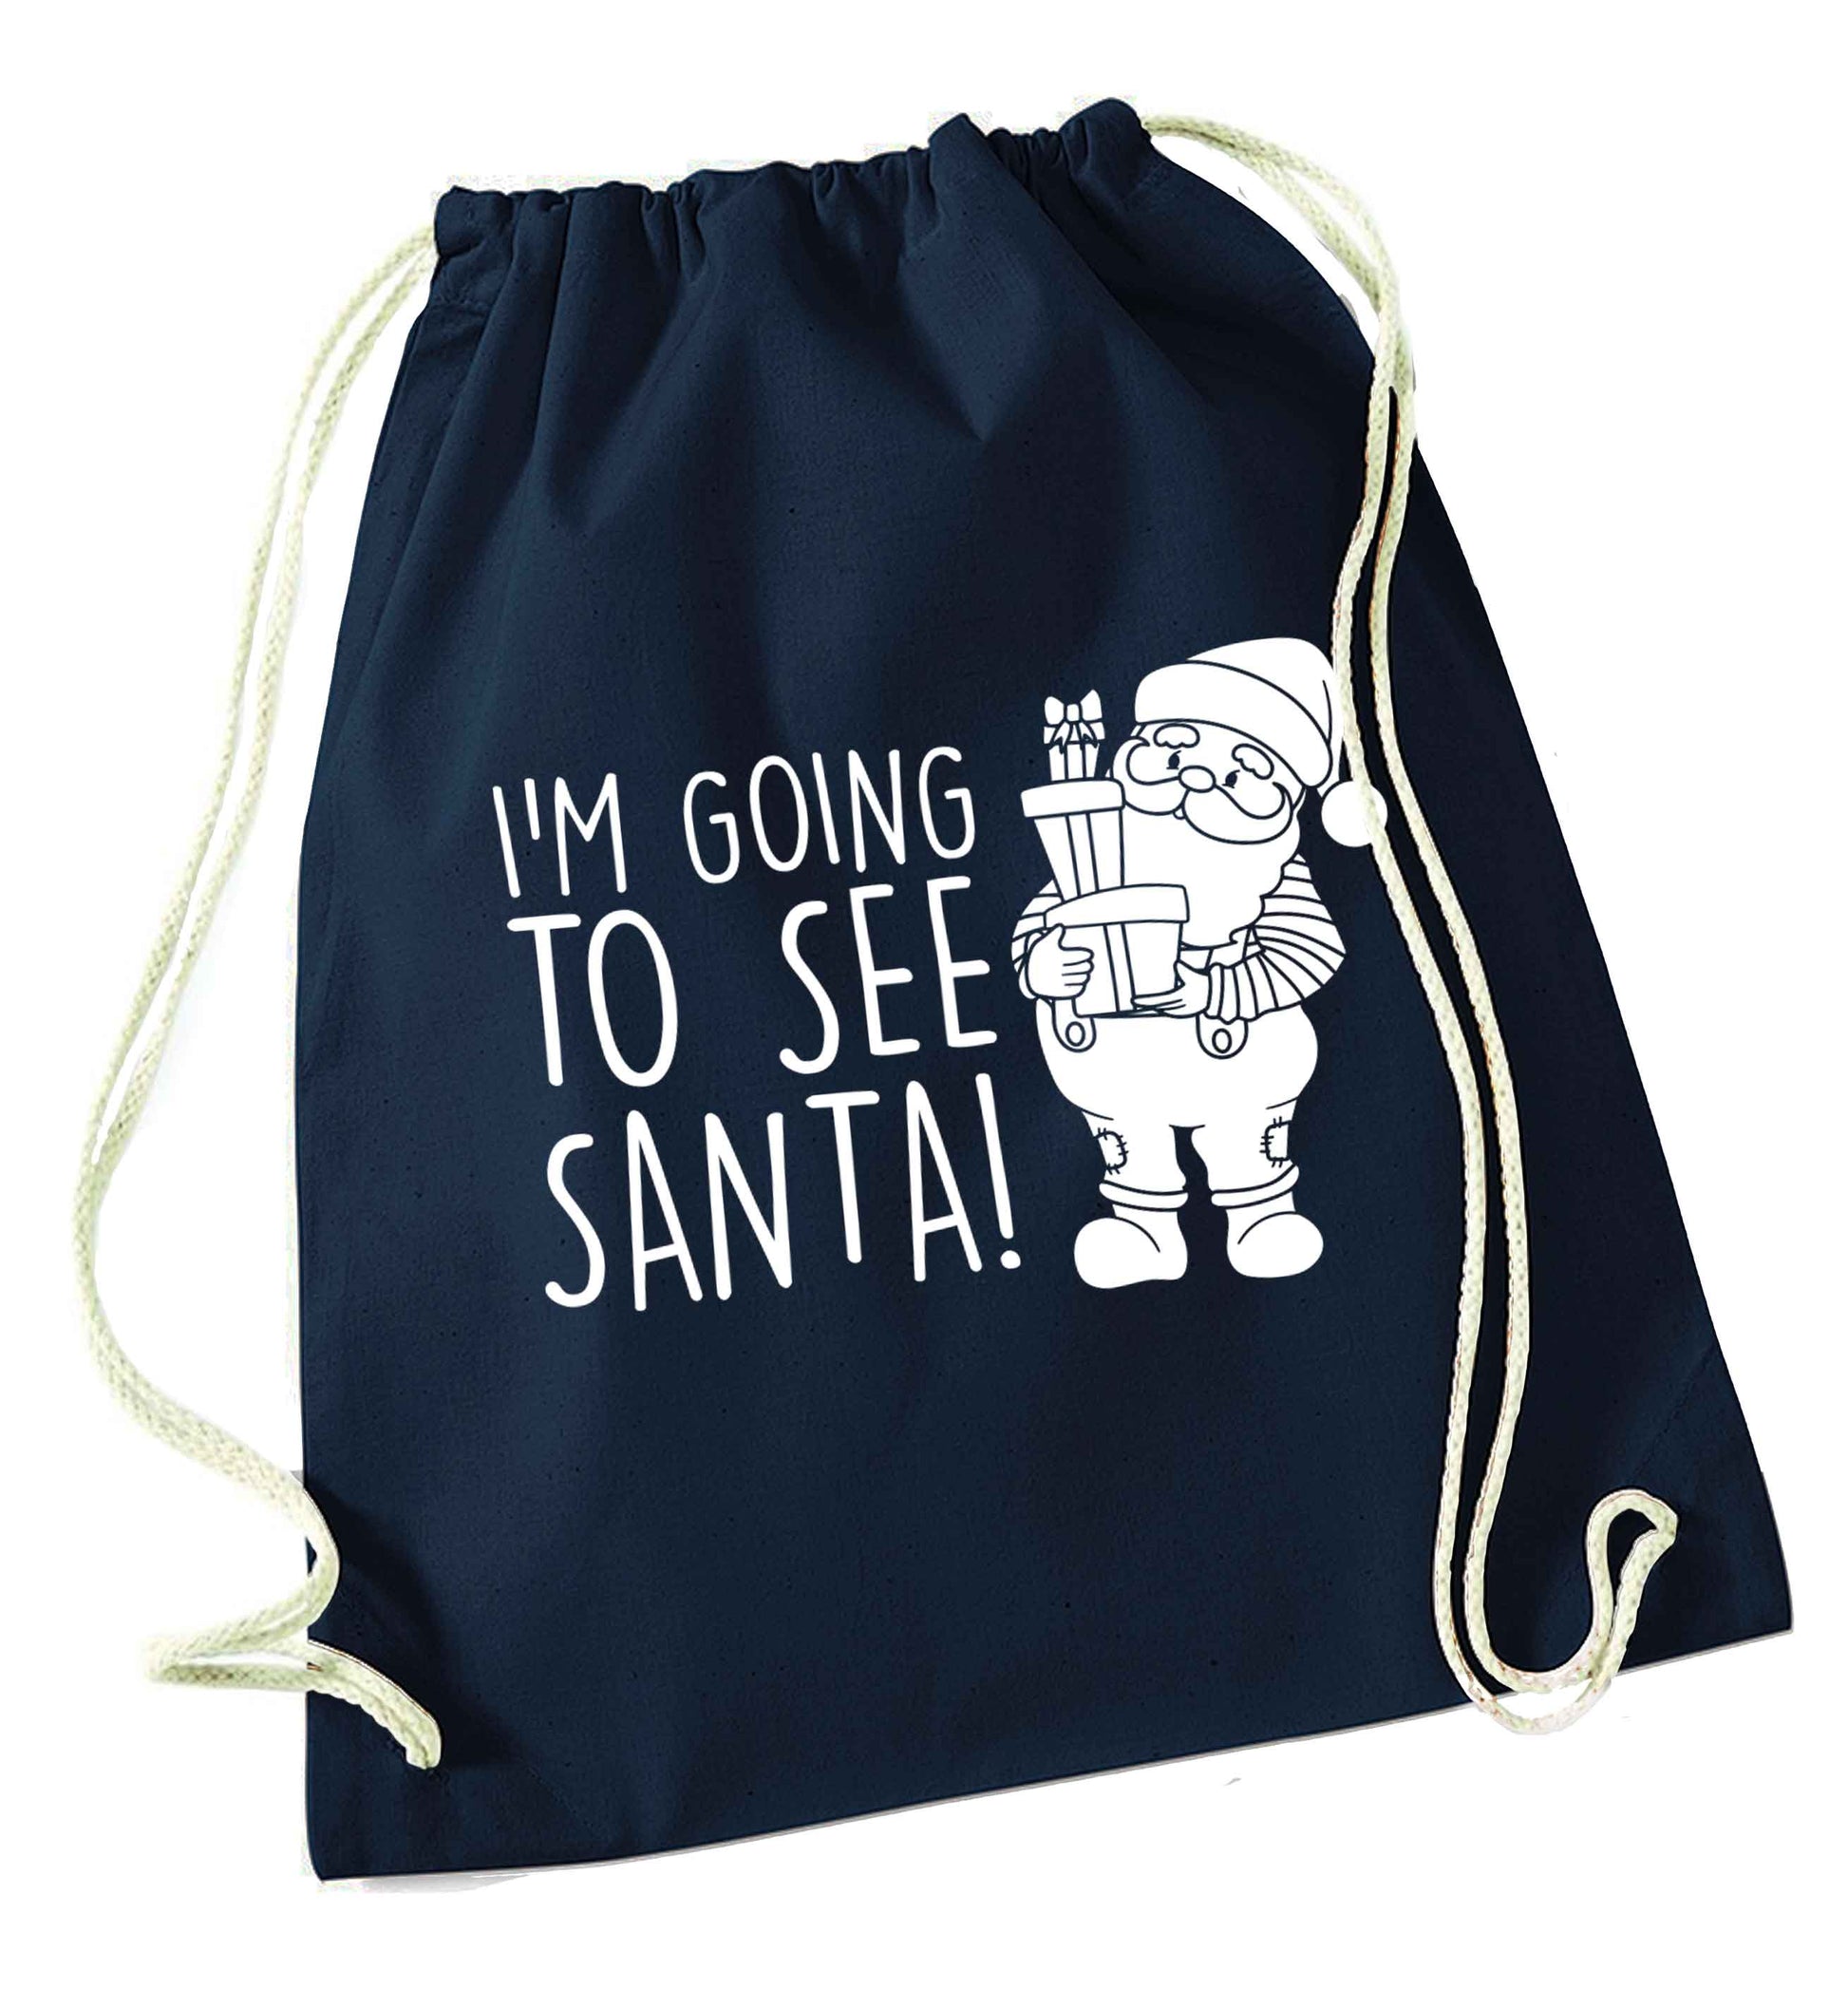 Merry Christmas navy drawstring bag